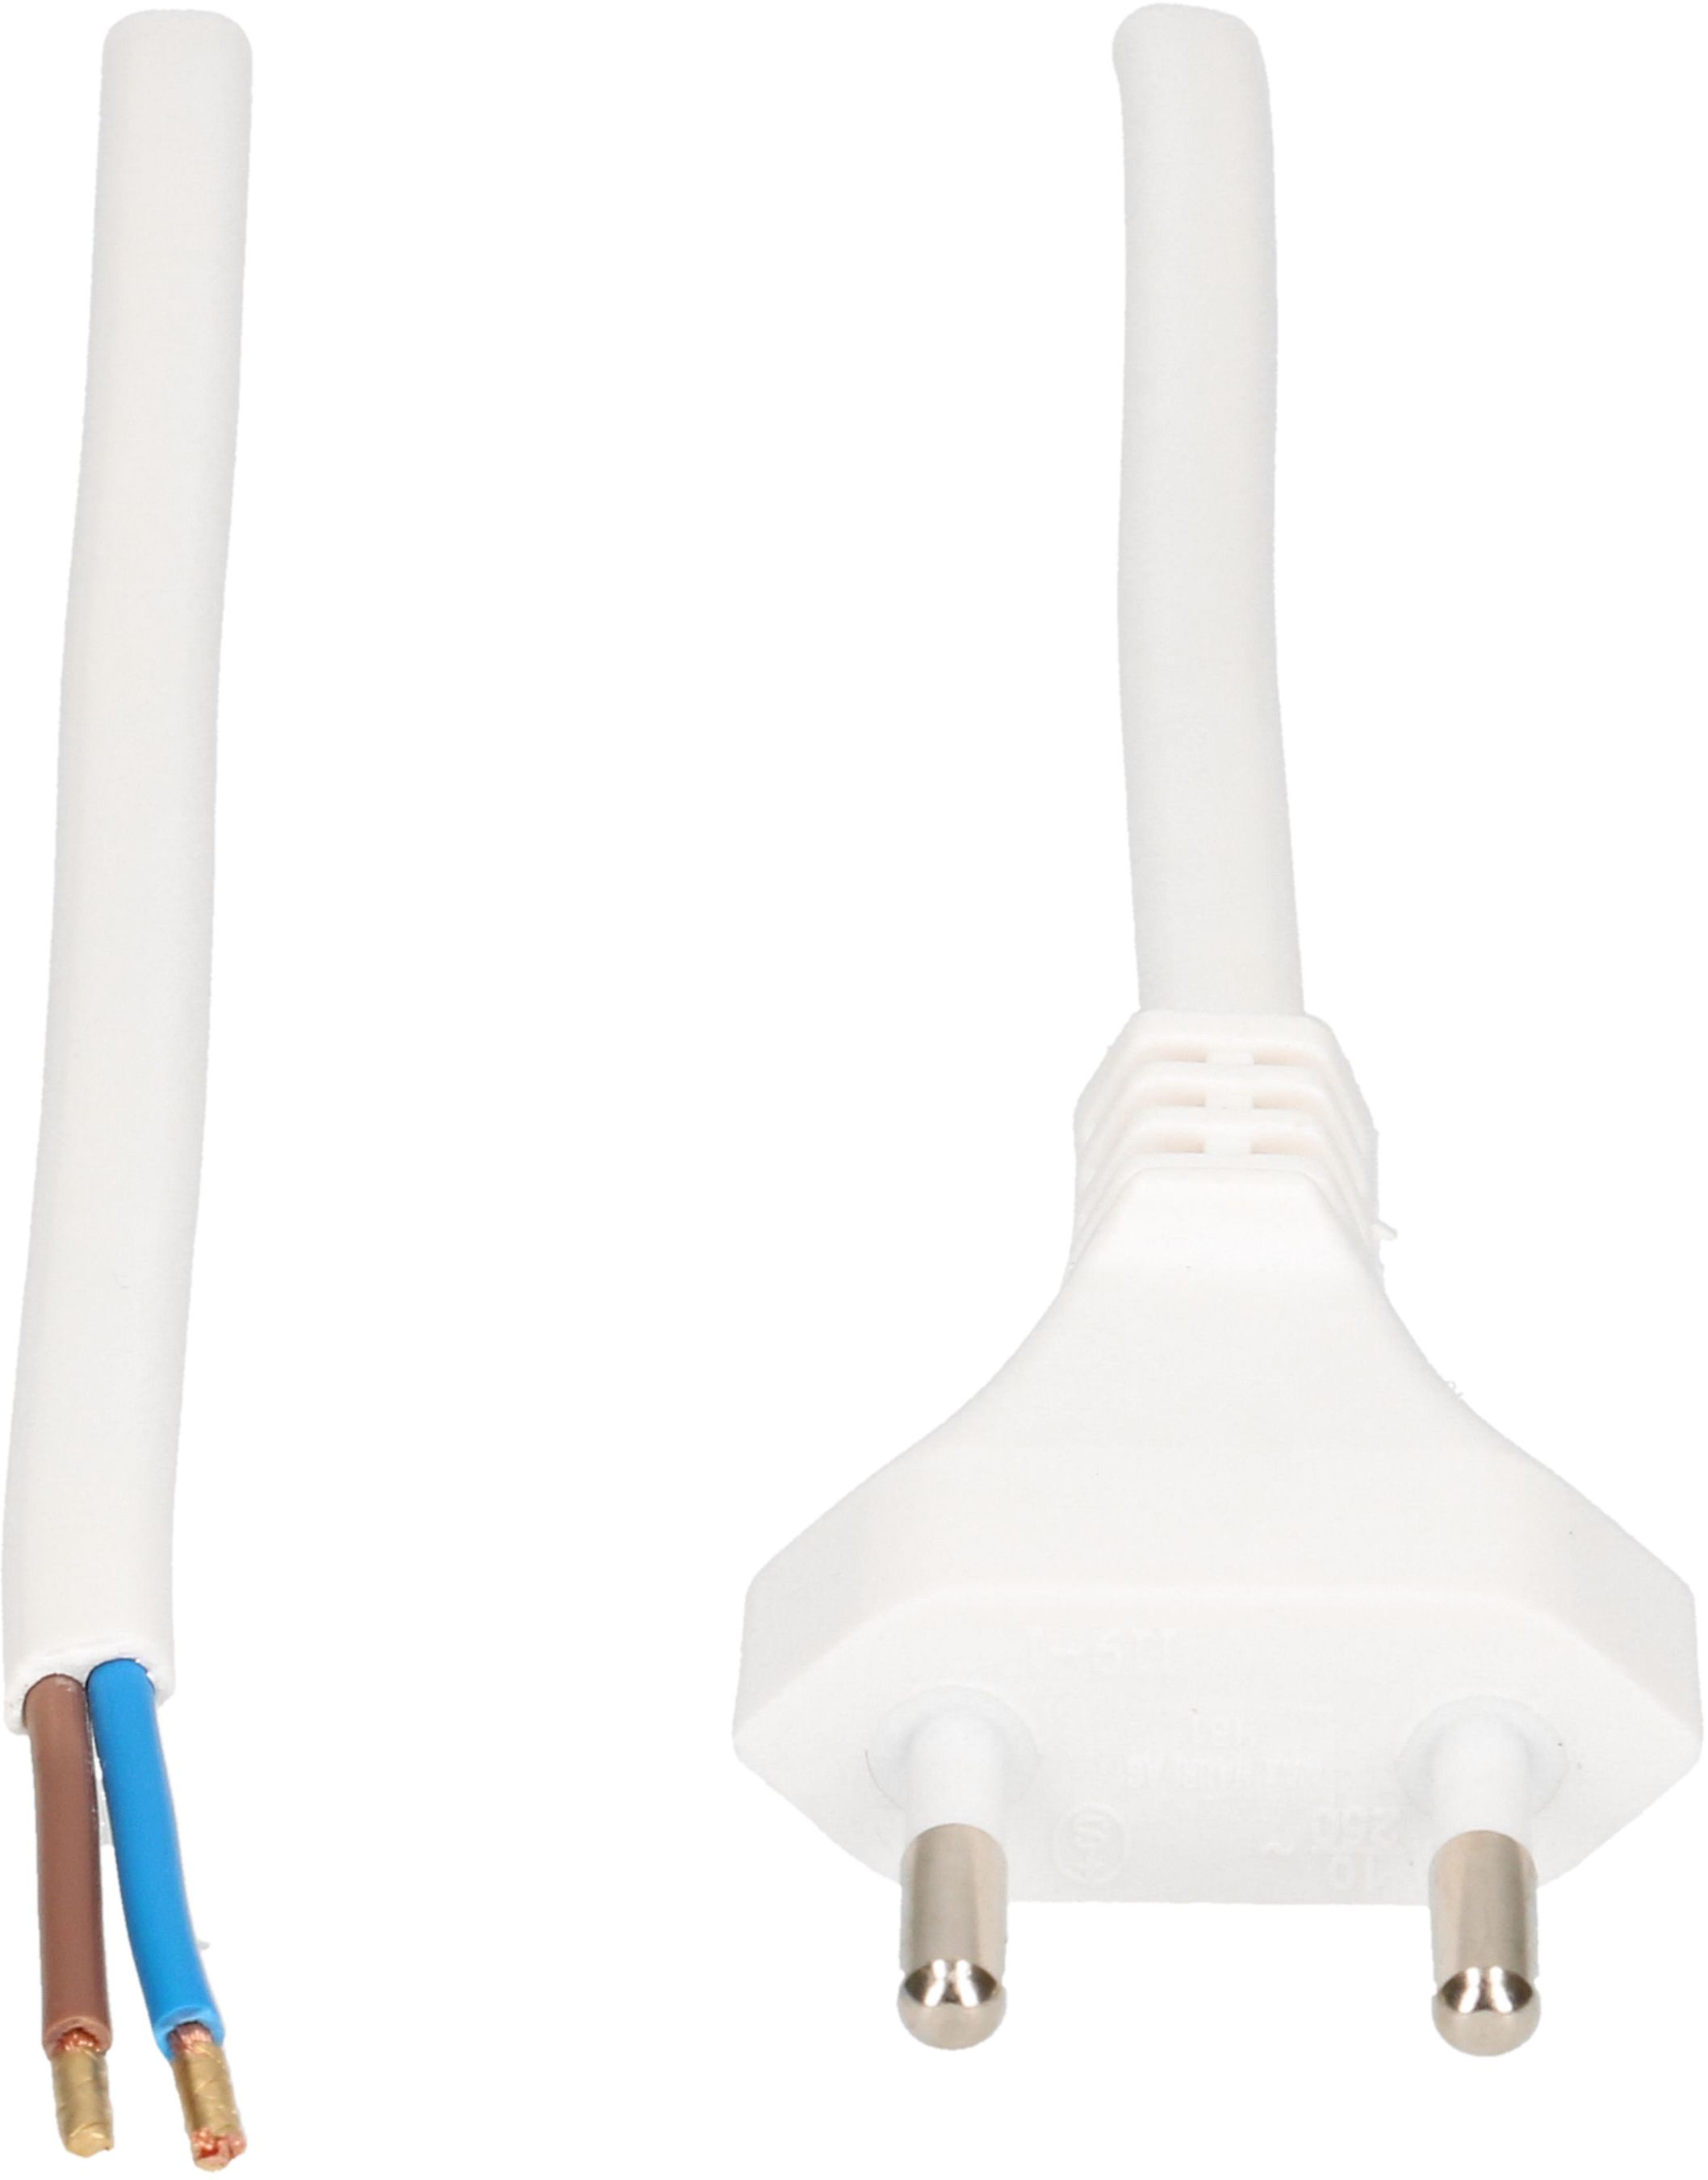 TDF câble secteur H05VVH2-F2X1.0 5m blanc type 11